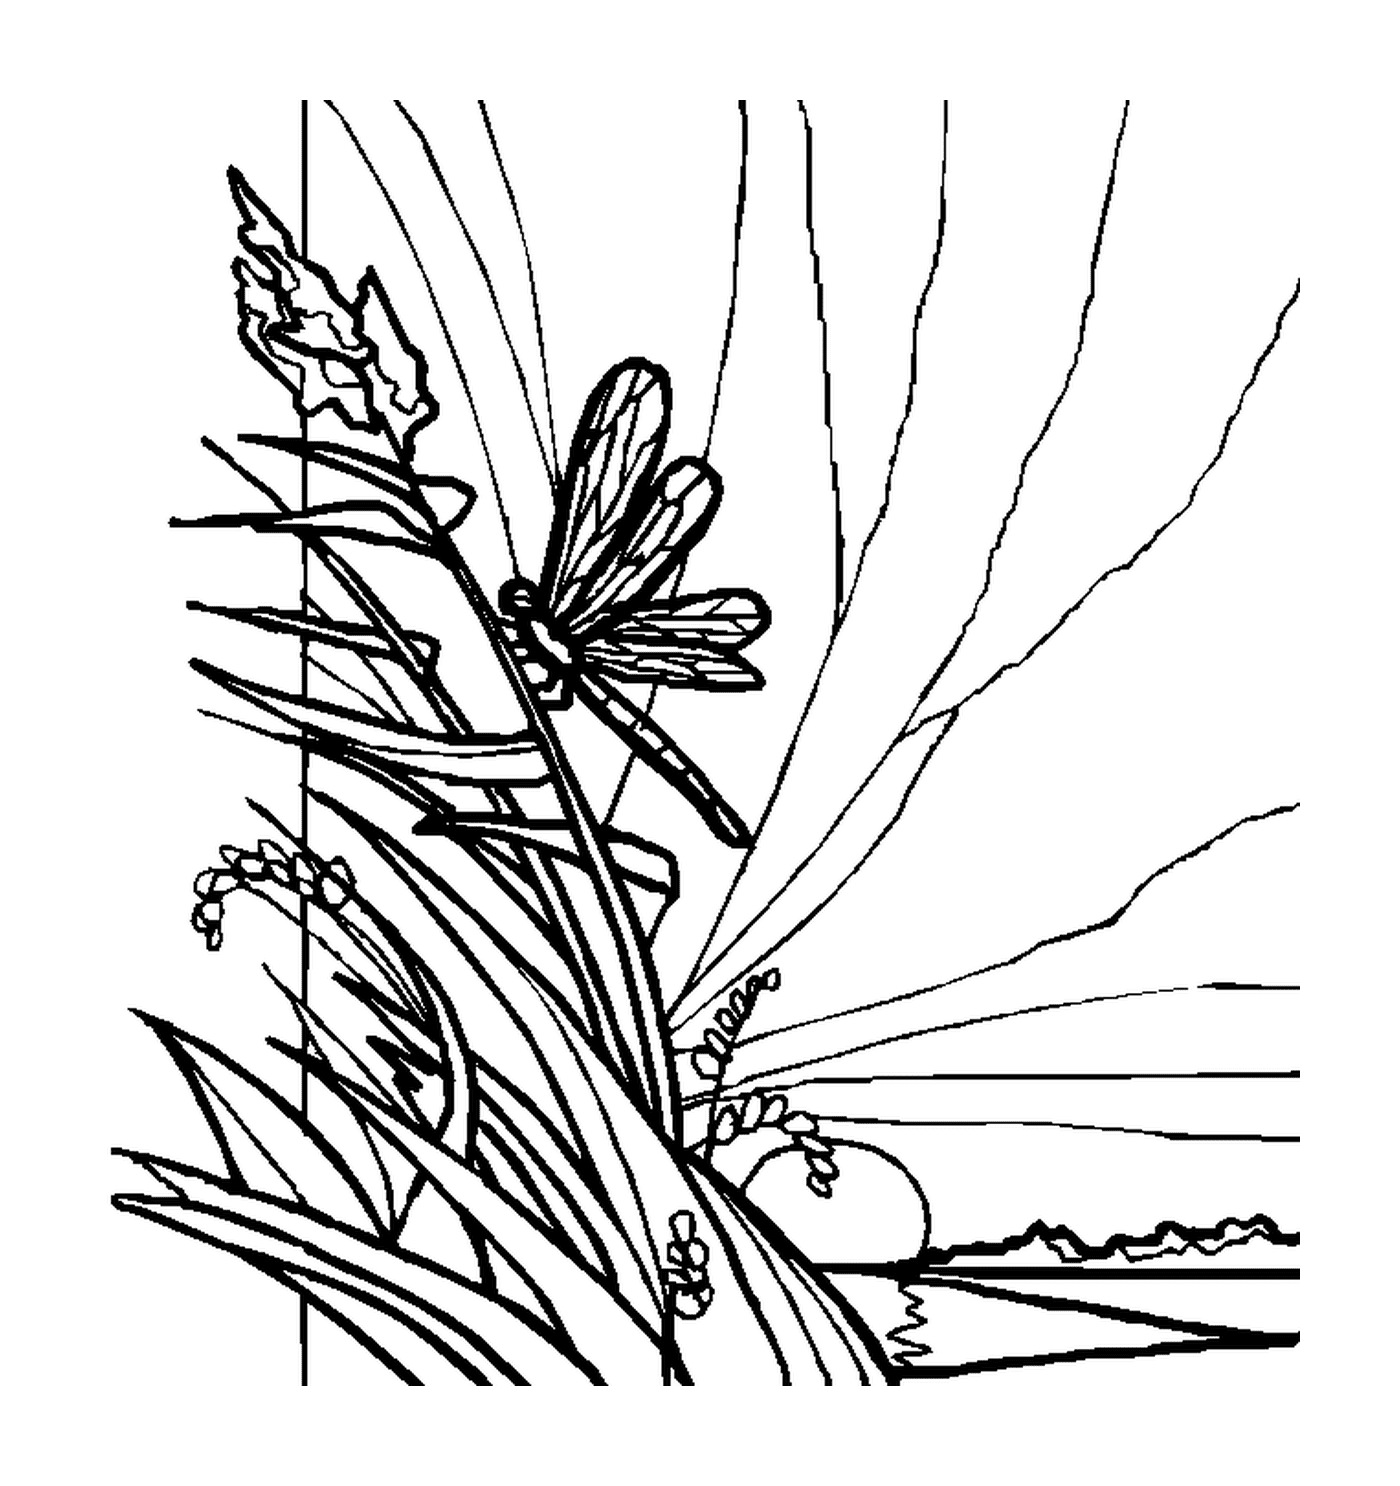 coloriage libellule posee sur de la vegetation